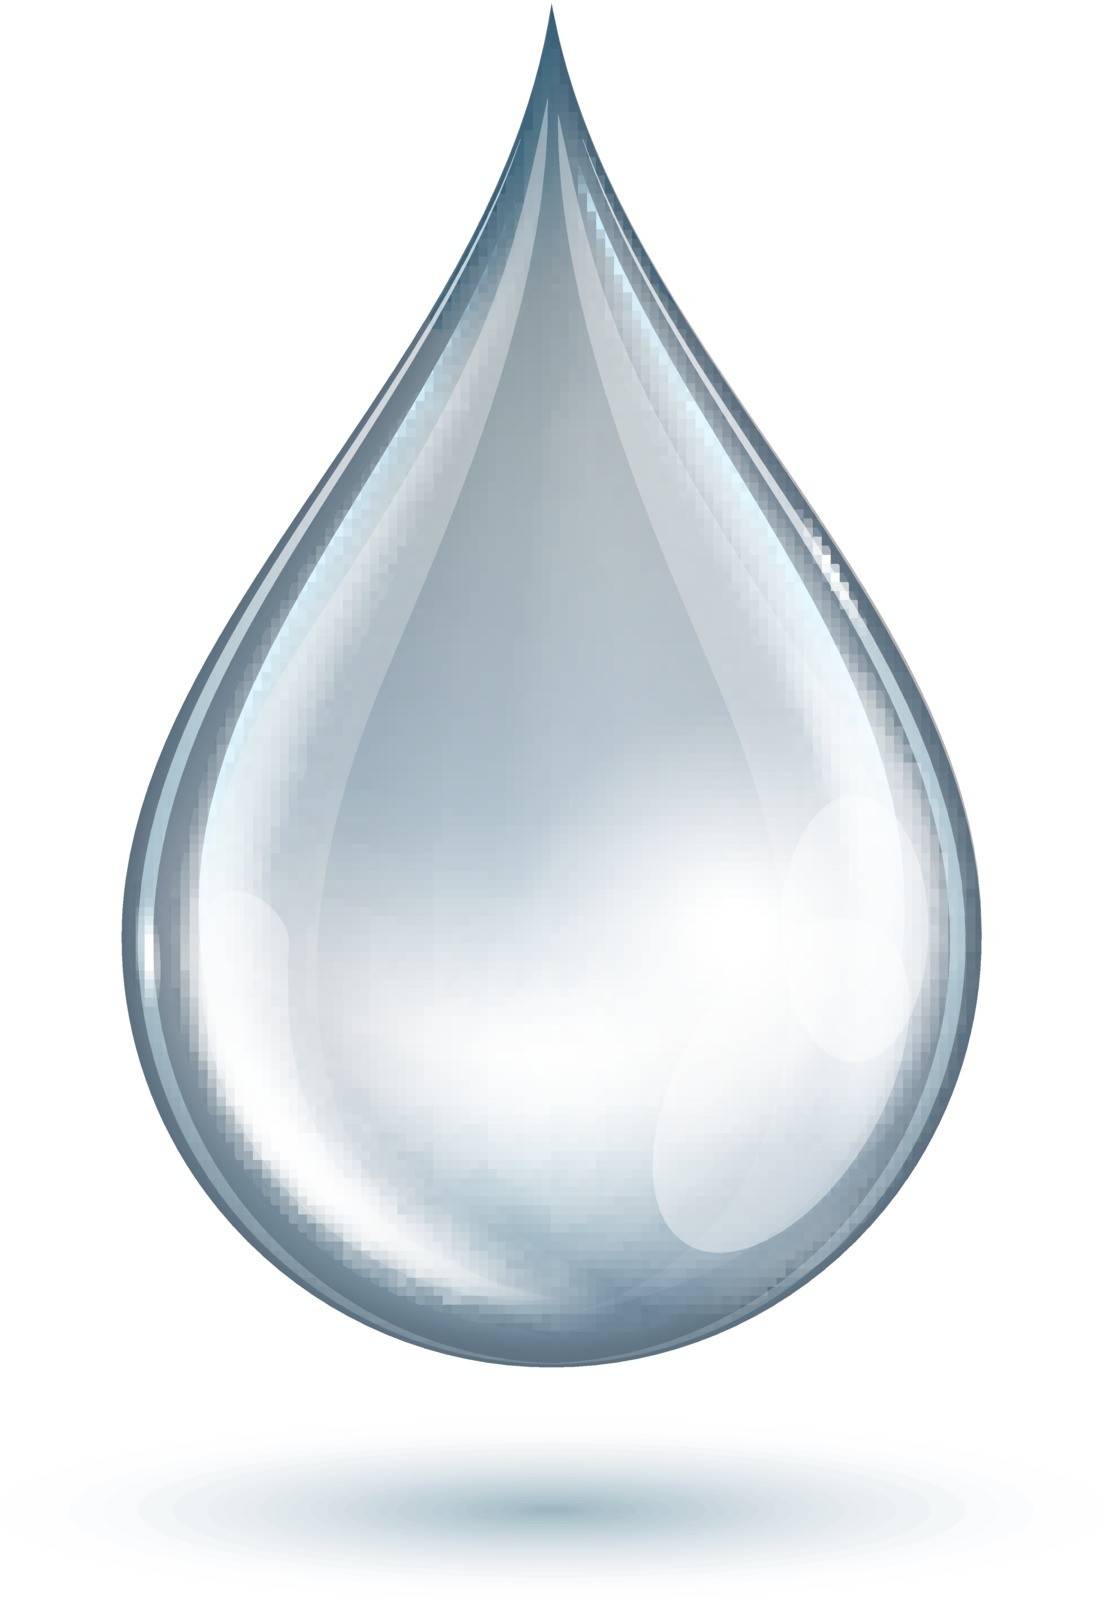 Water drop. Vector illustration